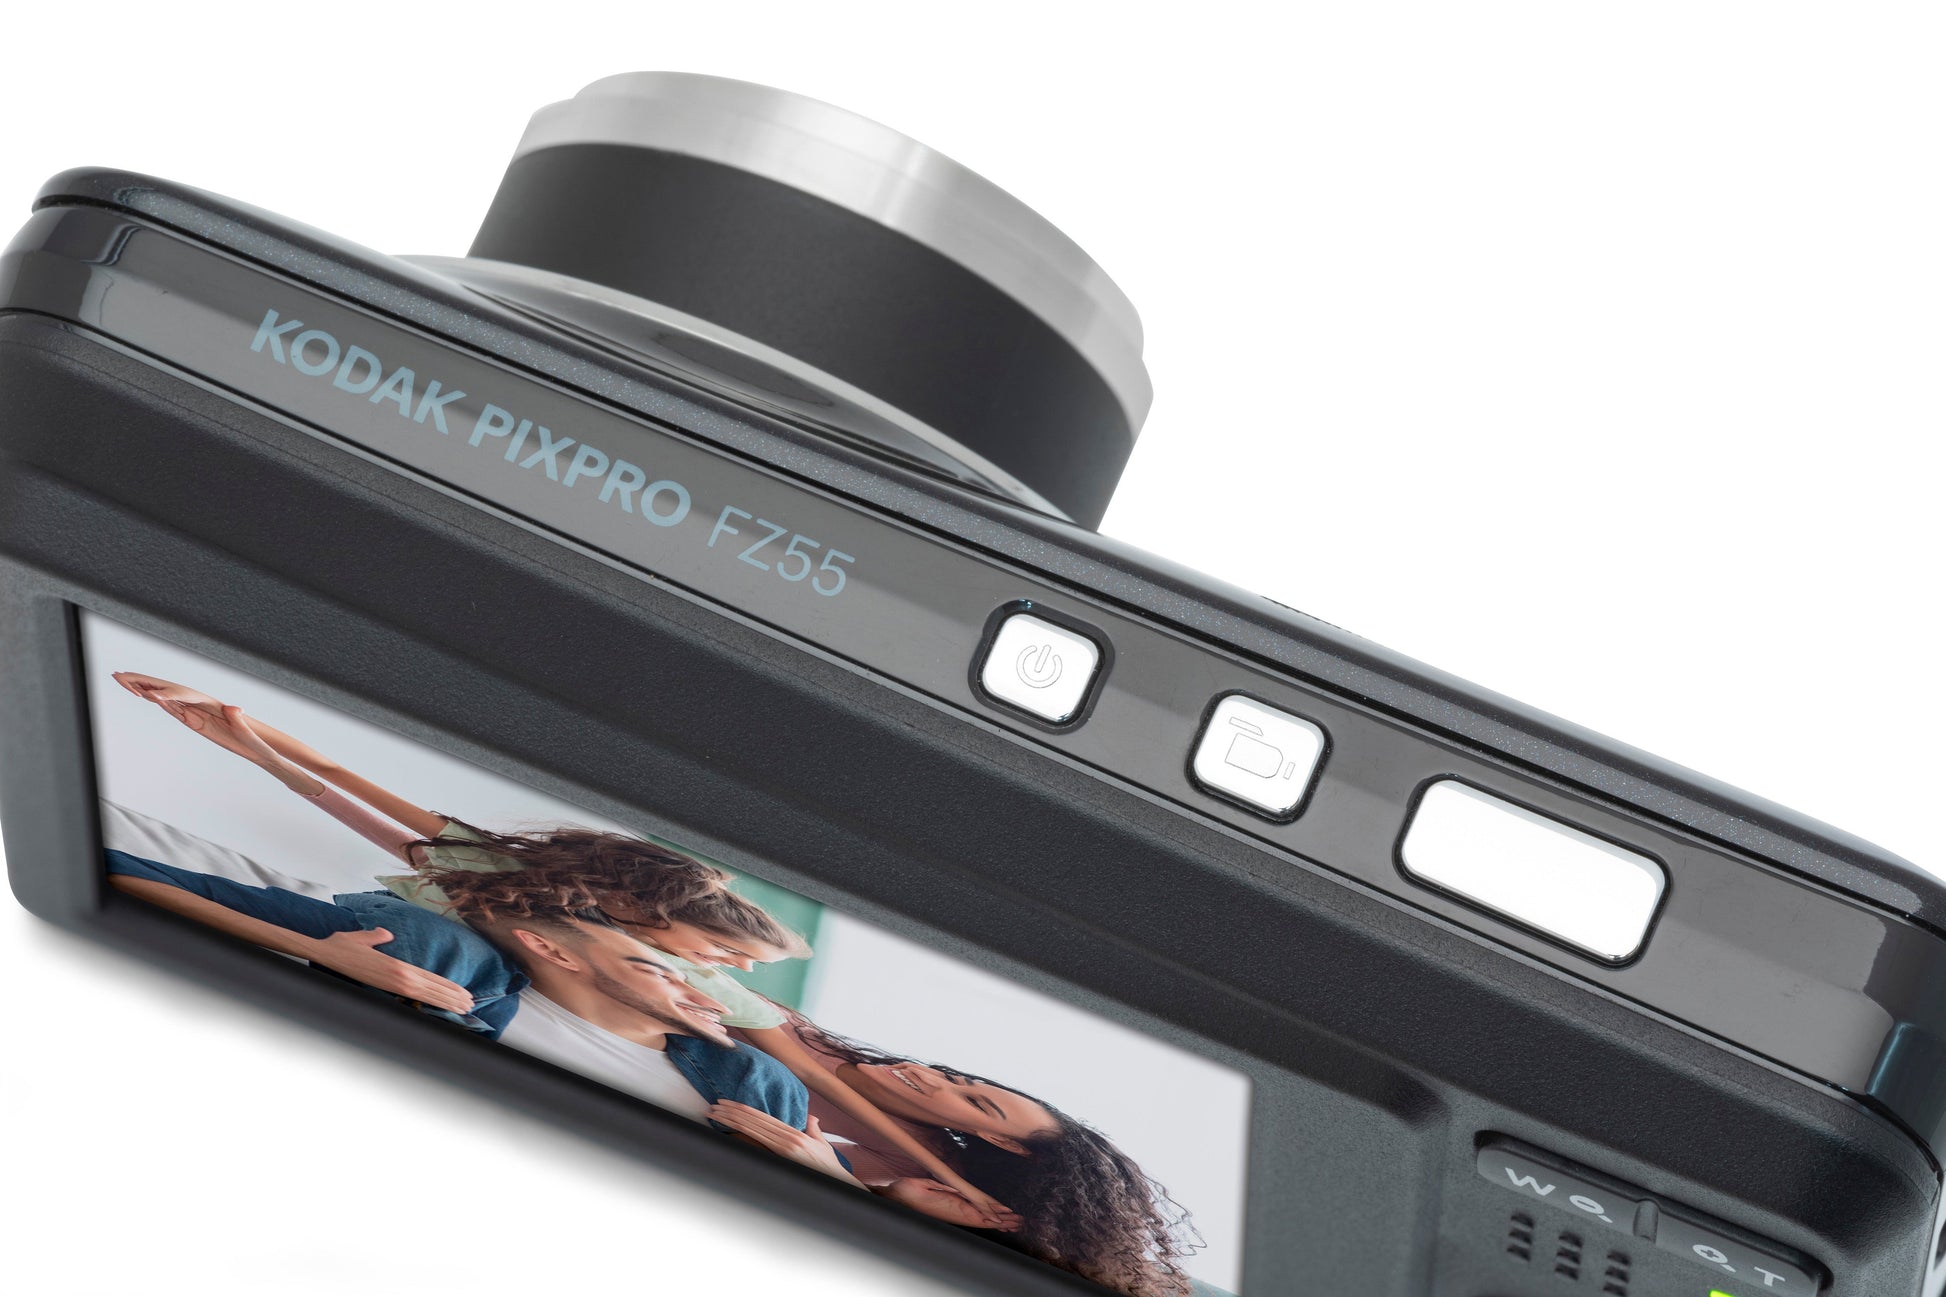 Kodak PIXPRO FZ55 16MP 5x Zoom Compact Camera - Black - maplin.co.uk